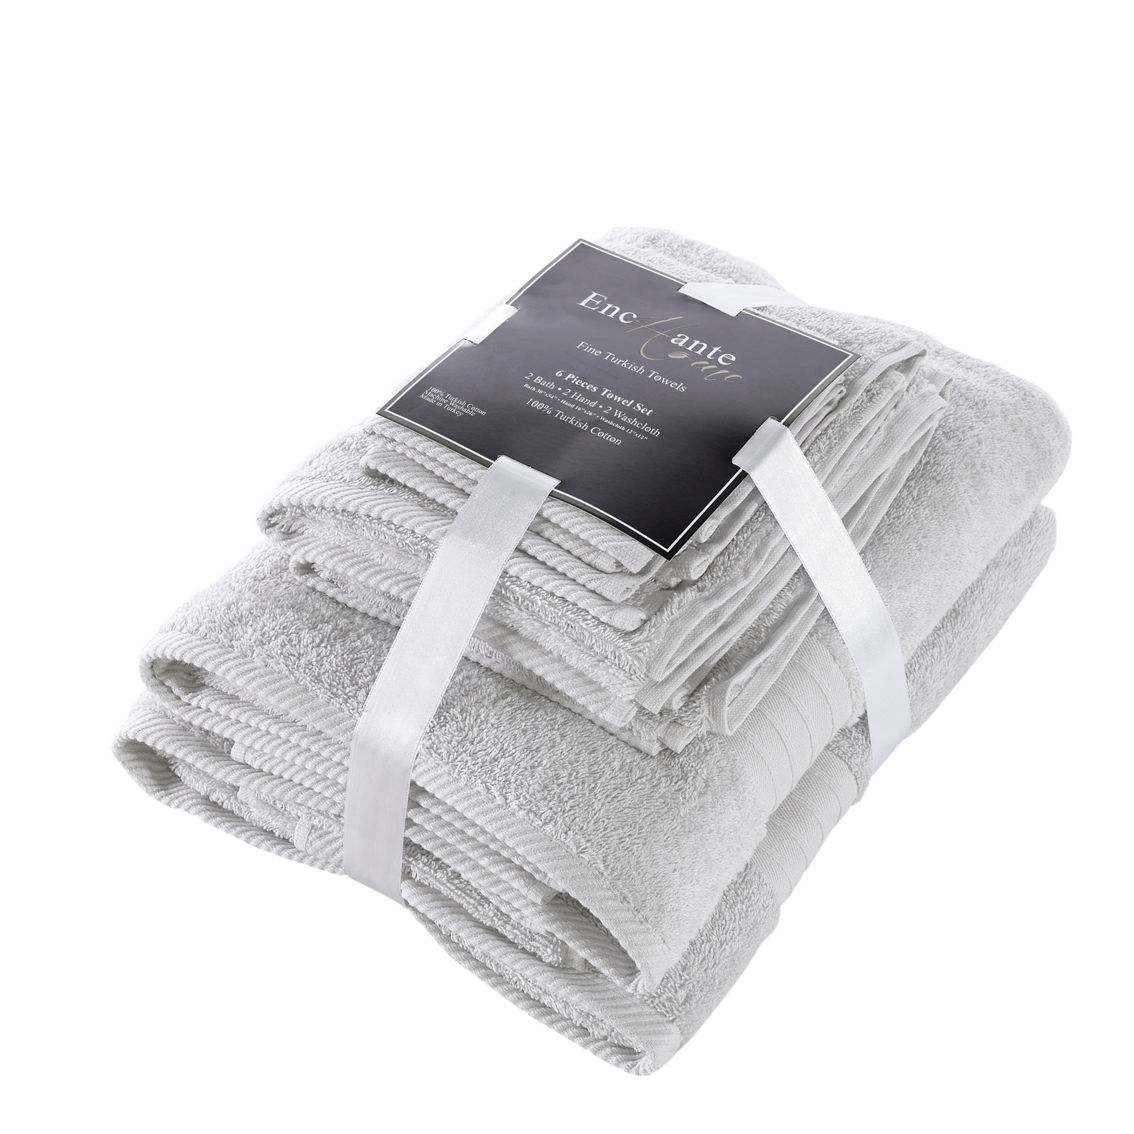 The Clean Store 6 Piece White Cotton Diamond Bath Towel Set (2 Bath Towels, 2 Hand Towels and 2 Washcloths)